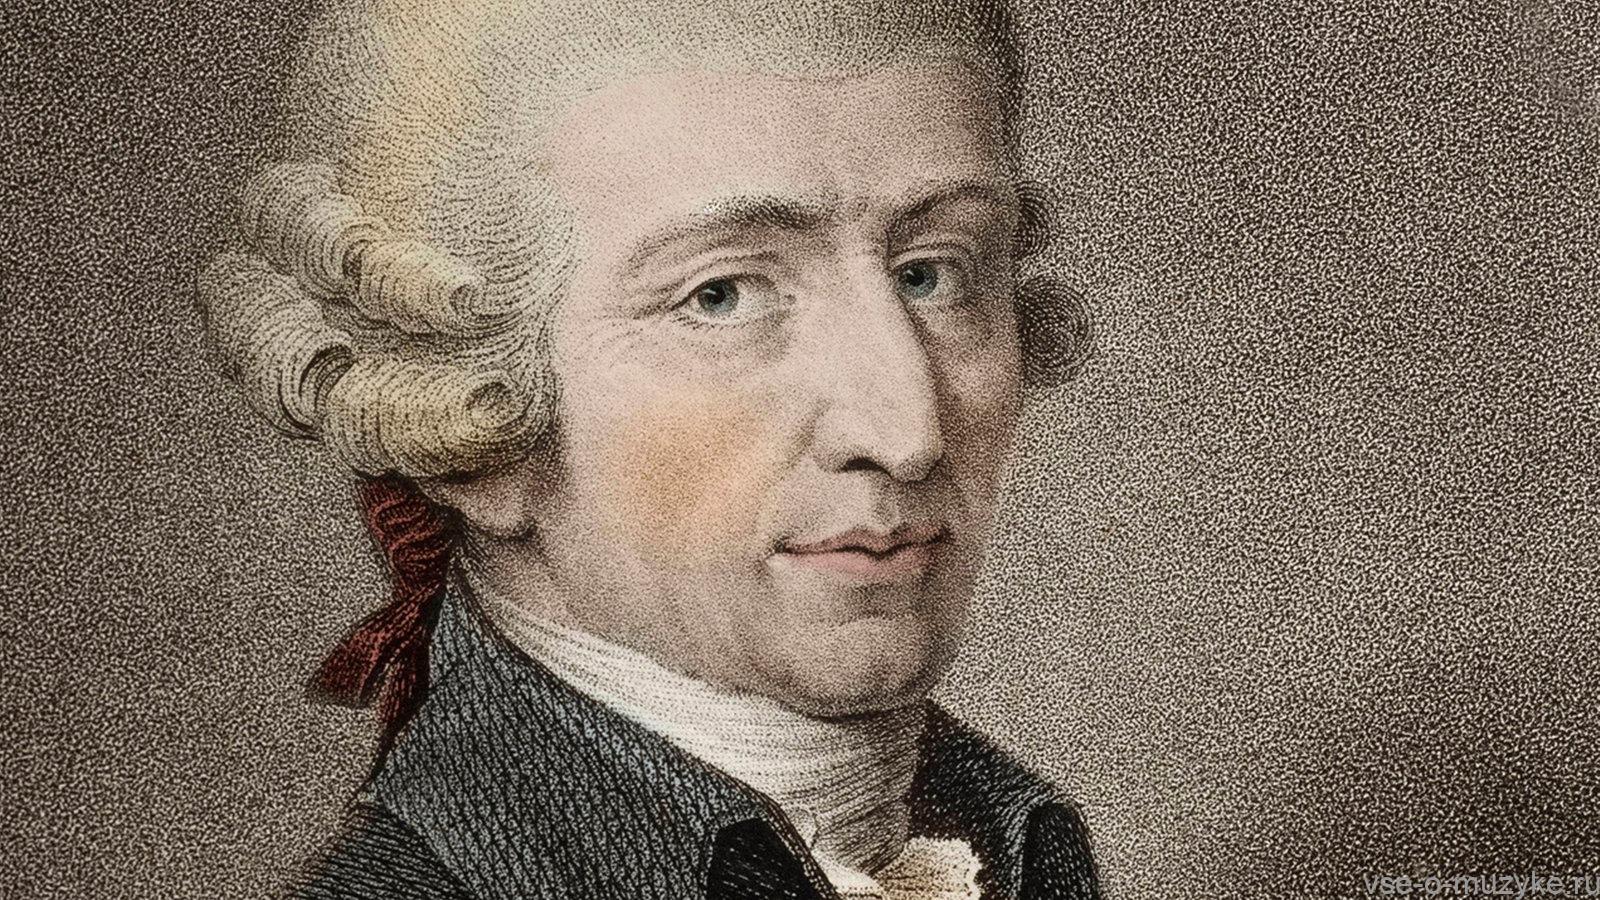 Franz Joseph Haydn